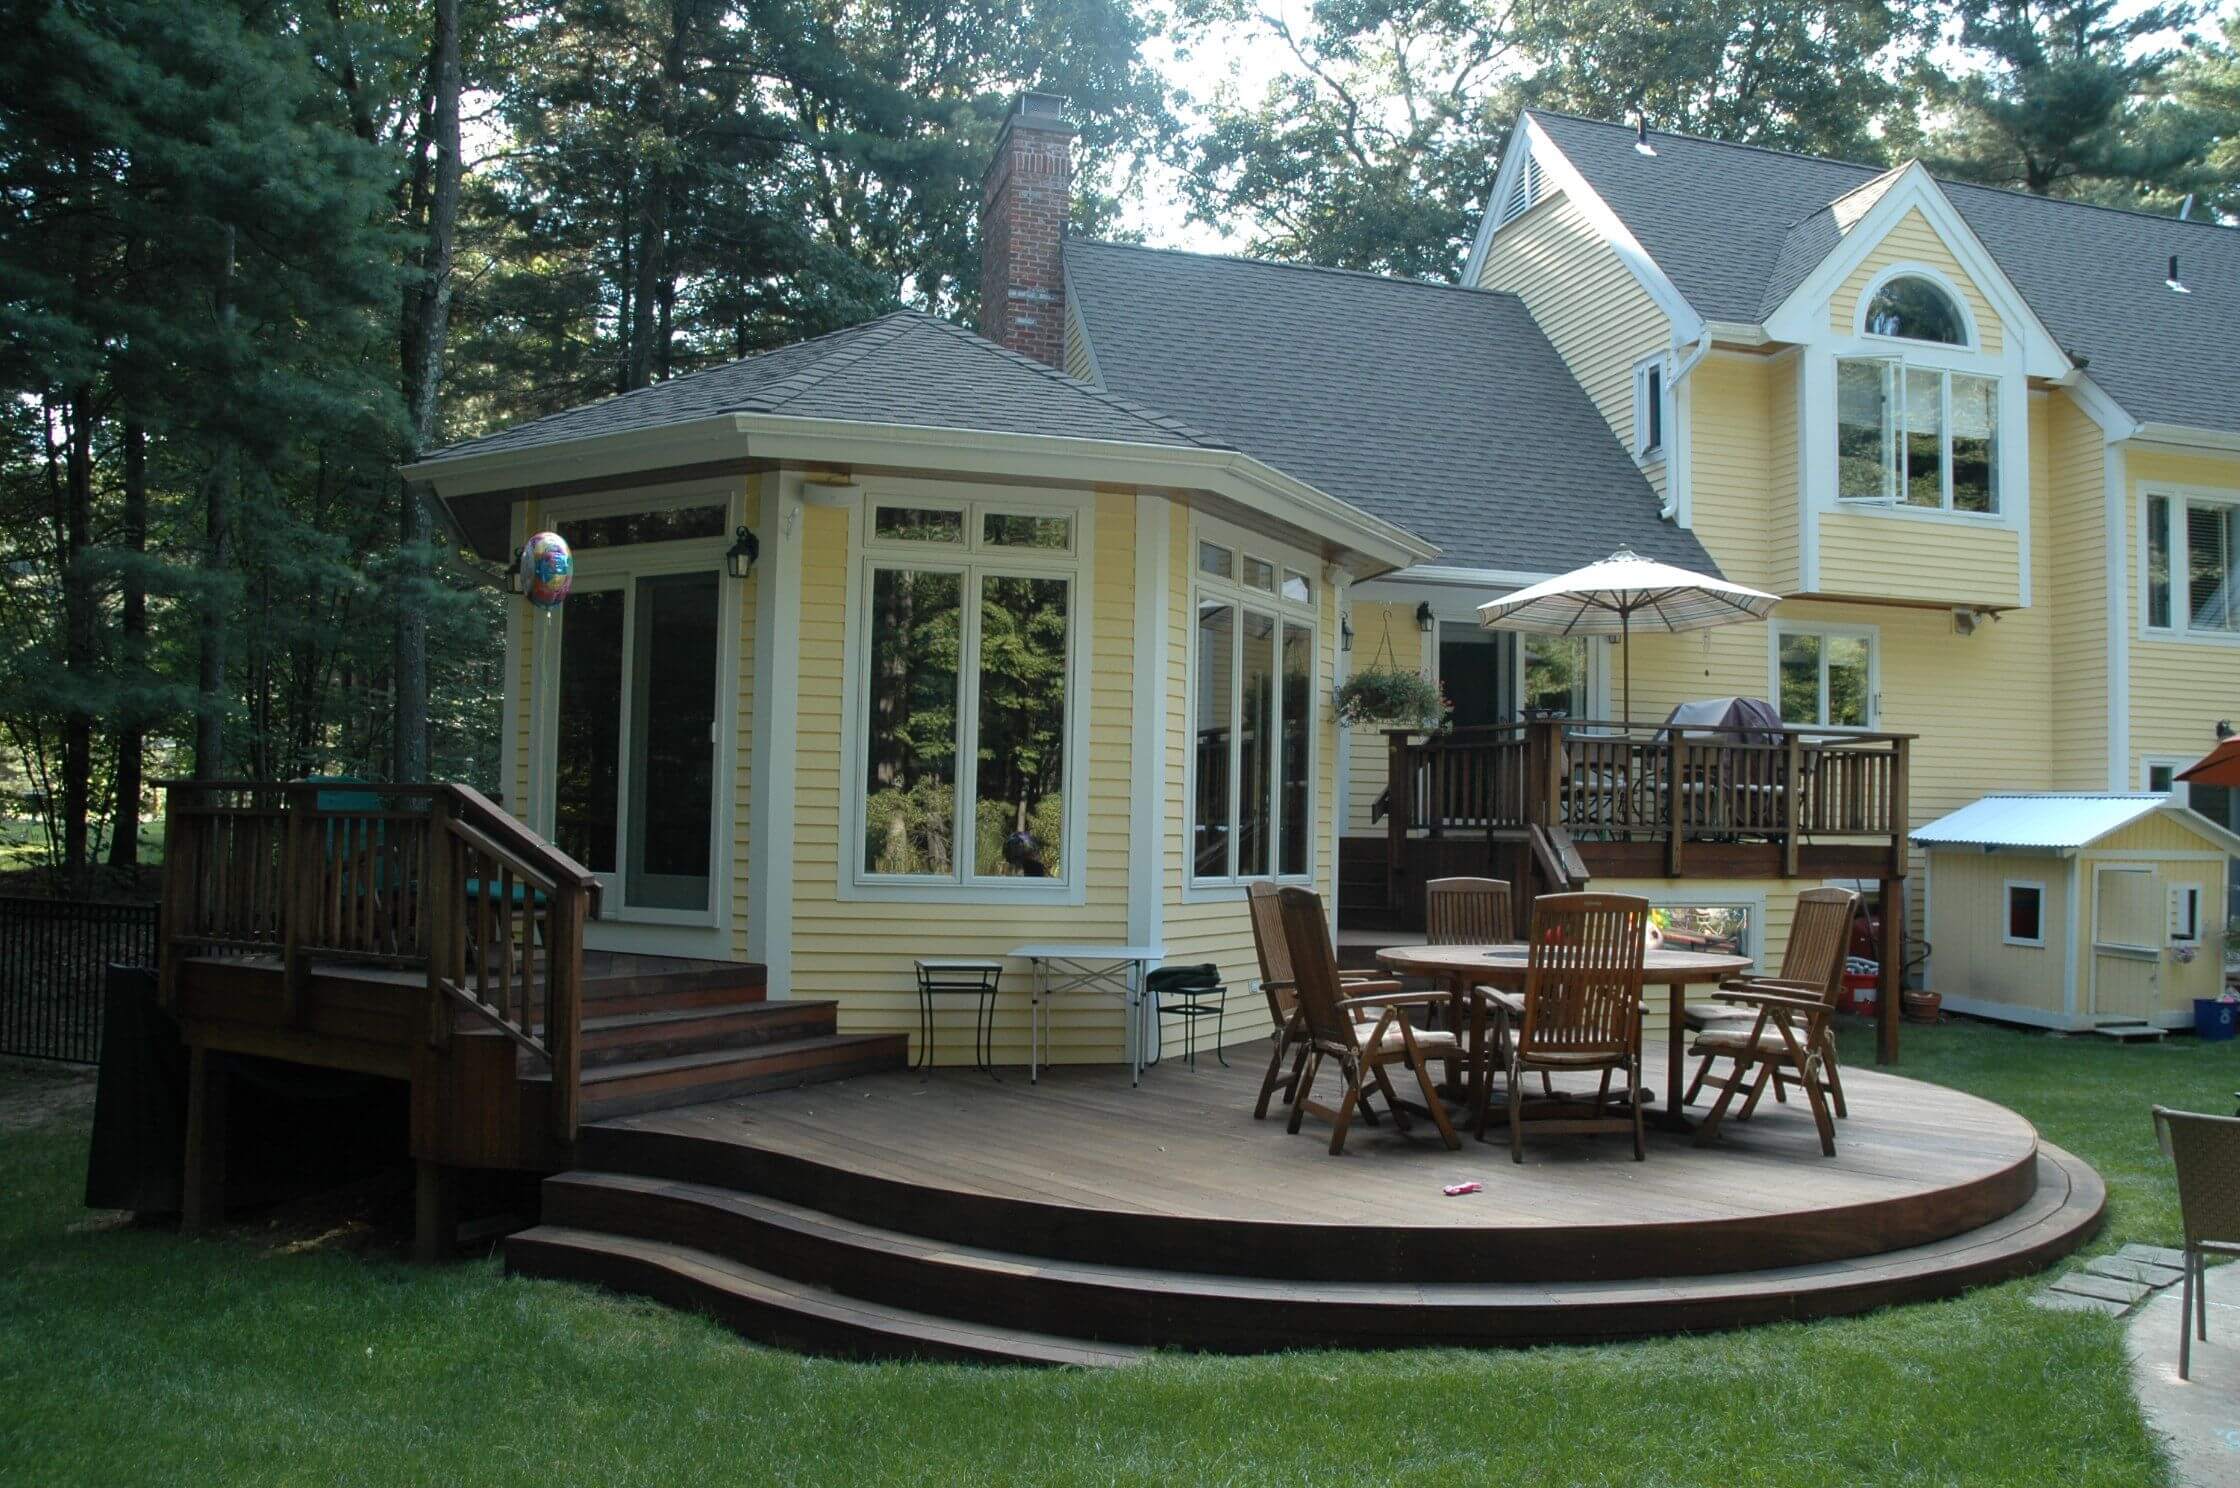 Custom backyard multi-level deck with seating area